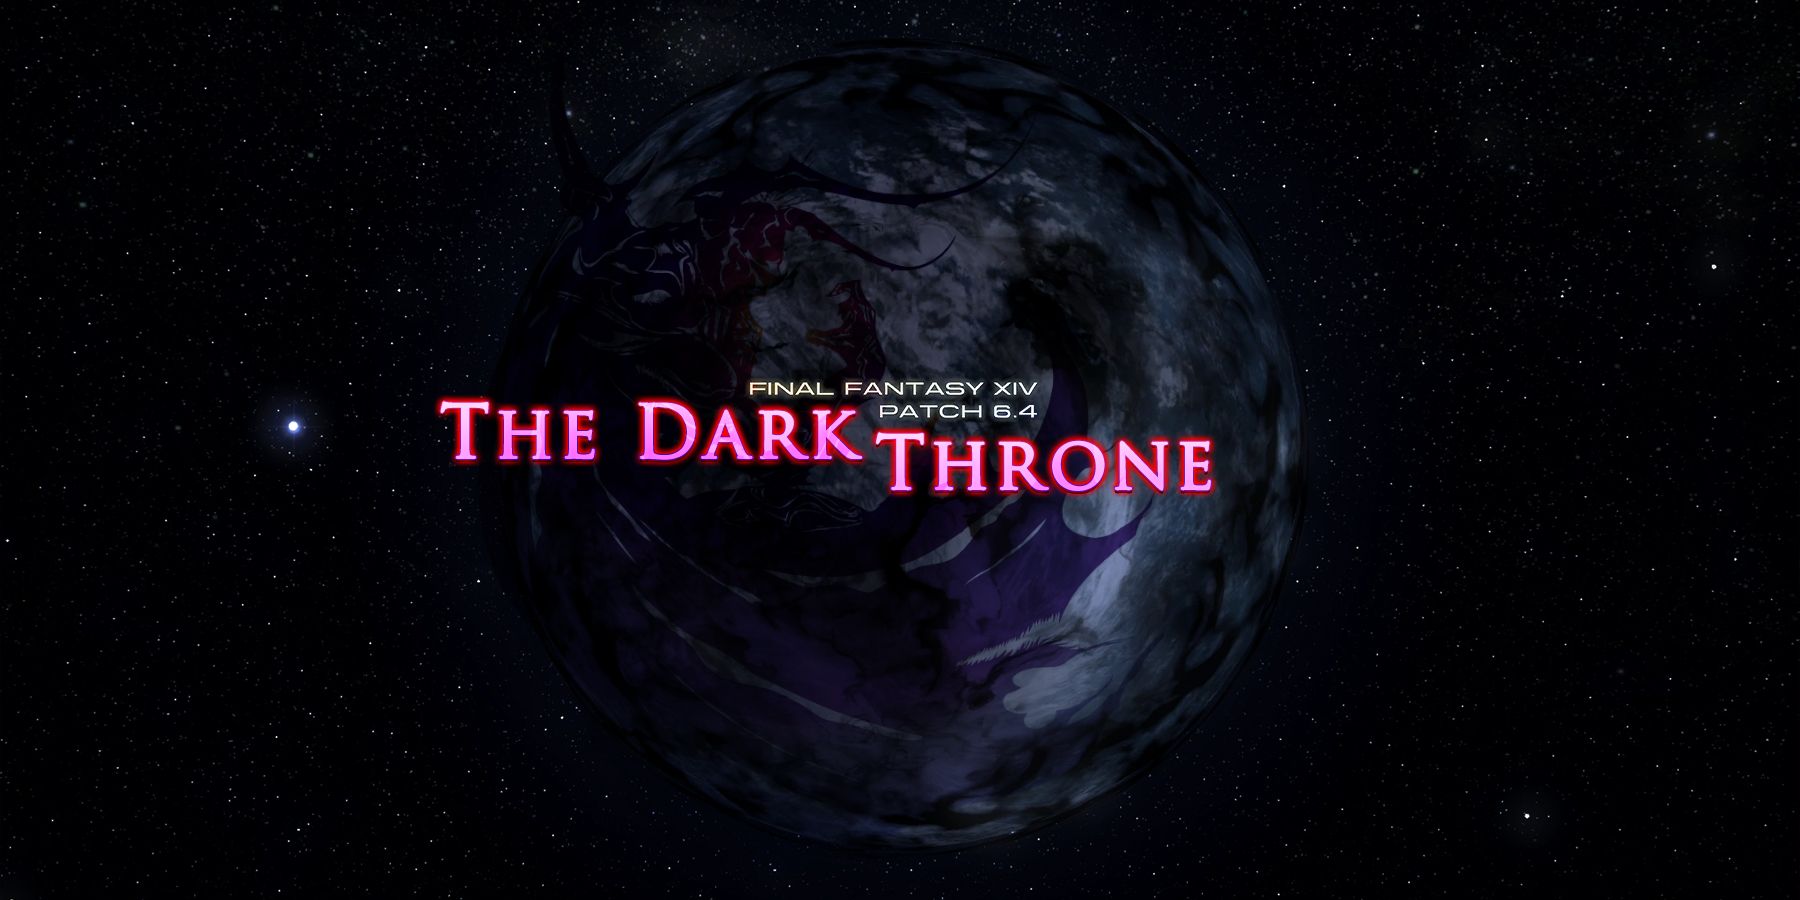 ffxiv final fantasy 14 endwalker the dark throne 6.4 revealed pandaemonium raid series